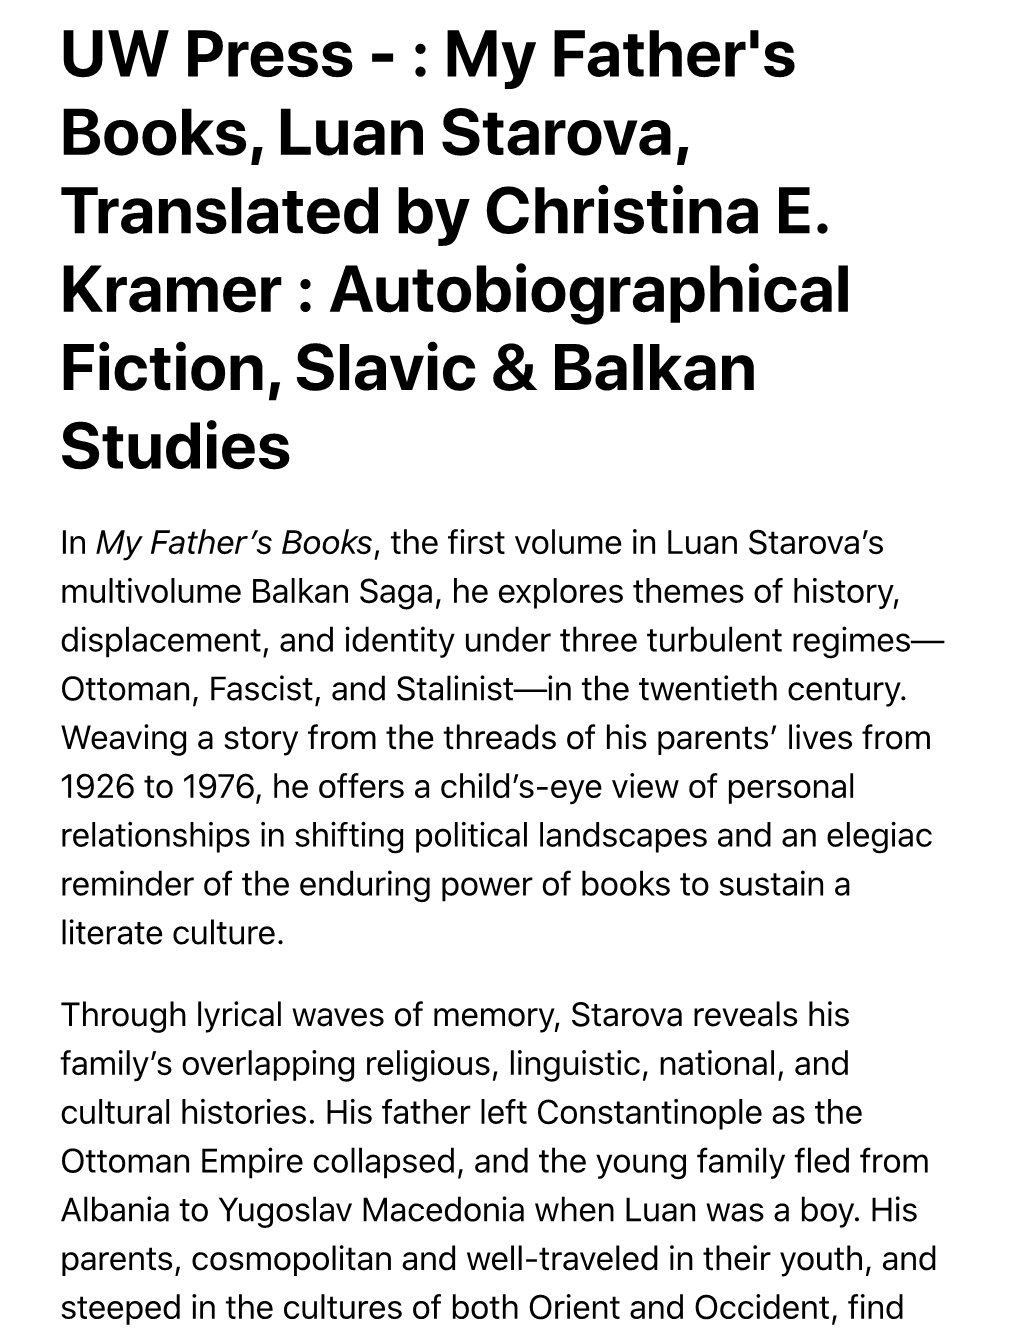 UW Press - : My Father's Books, Luan Starova, Translated by Christina E